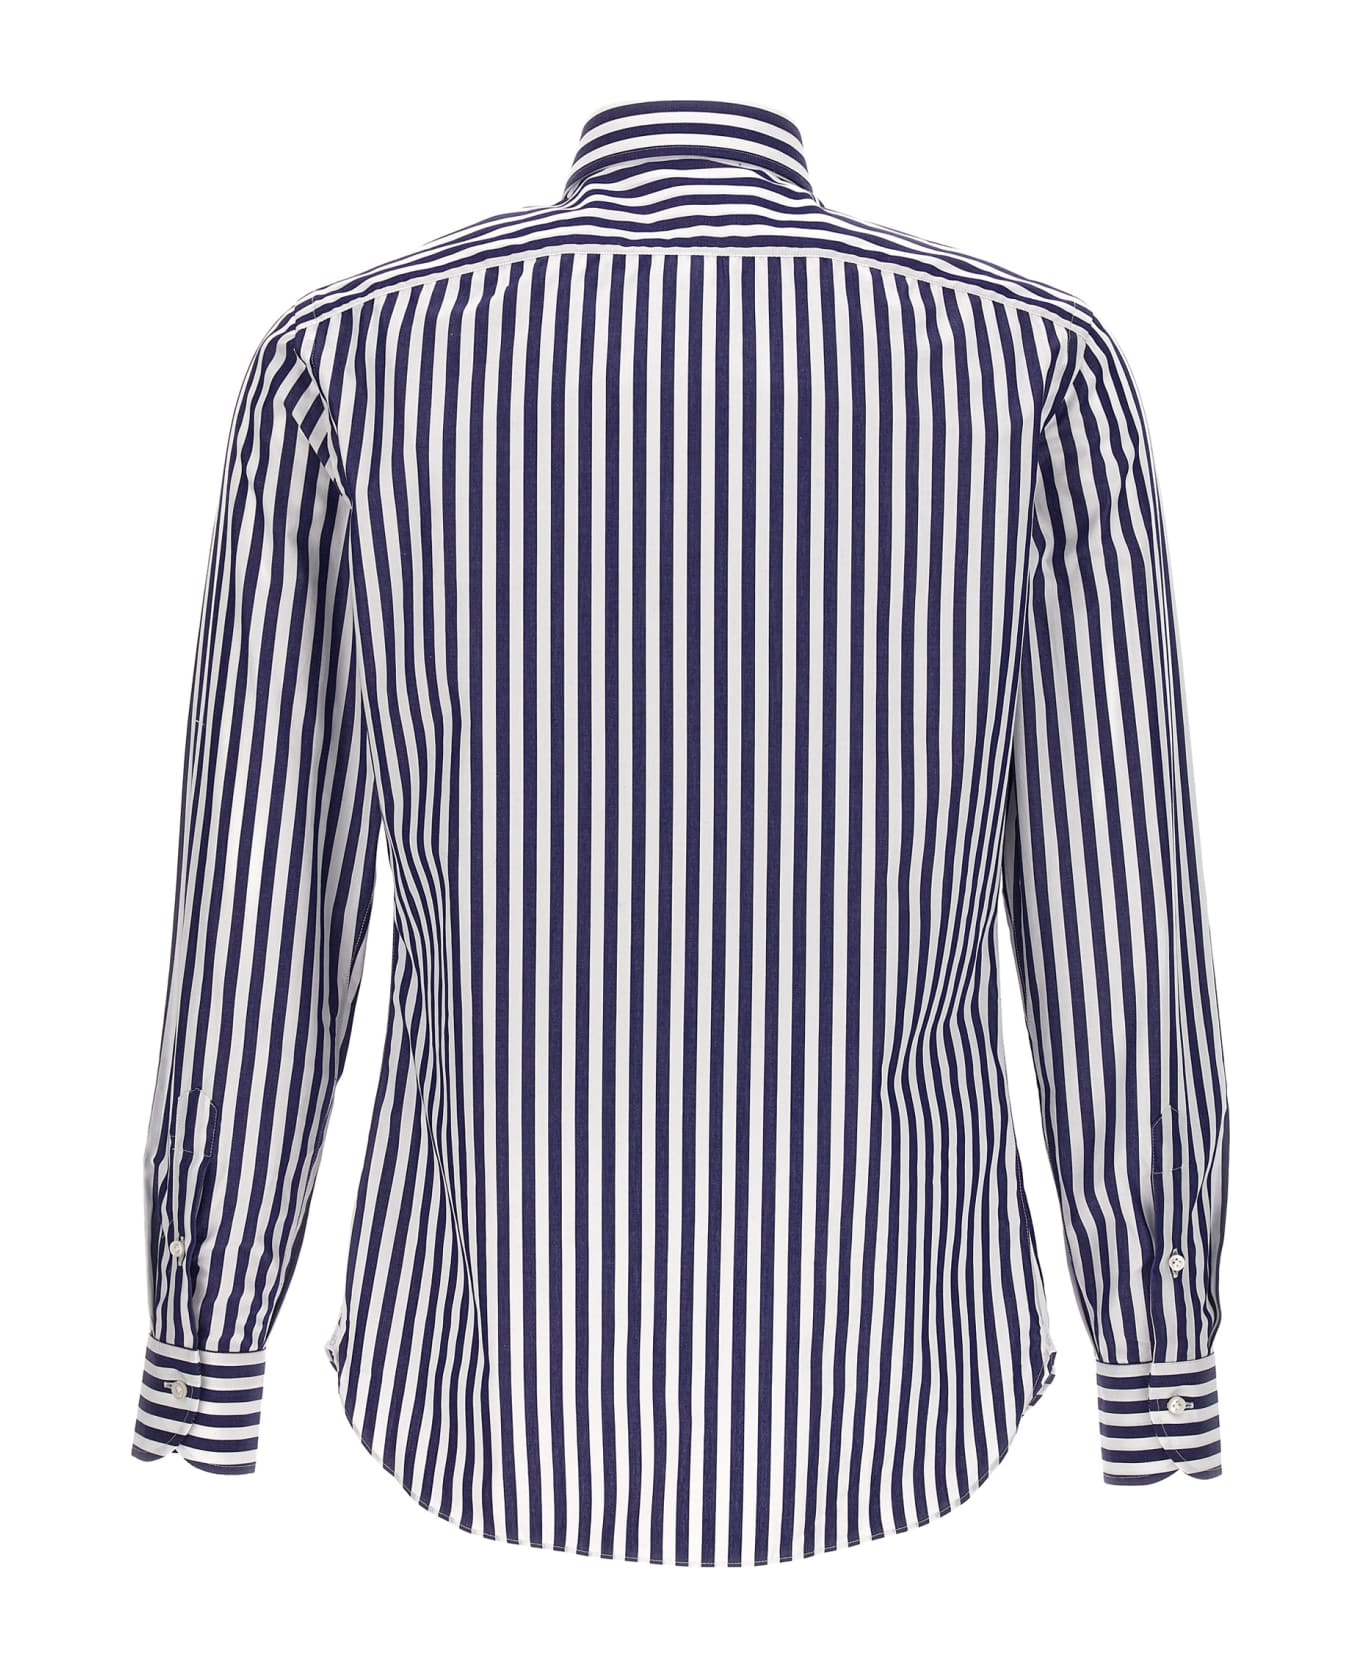 Borriello Napoli Striped Shirt - Blue